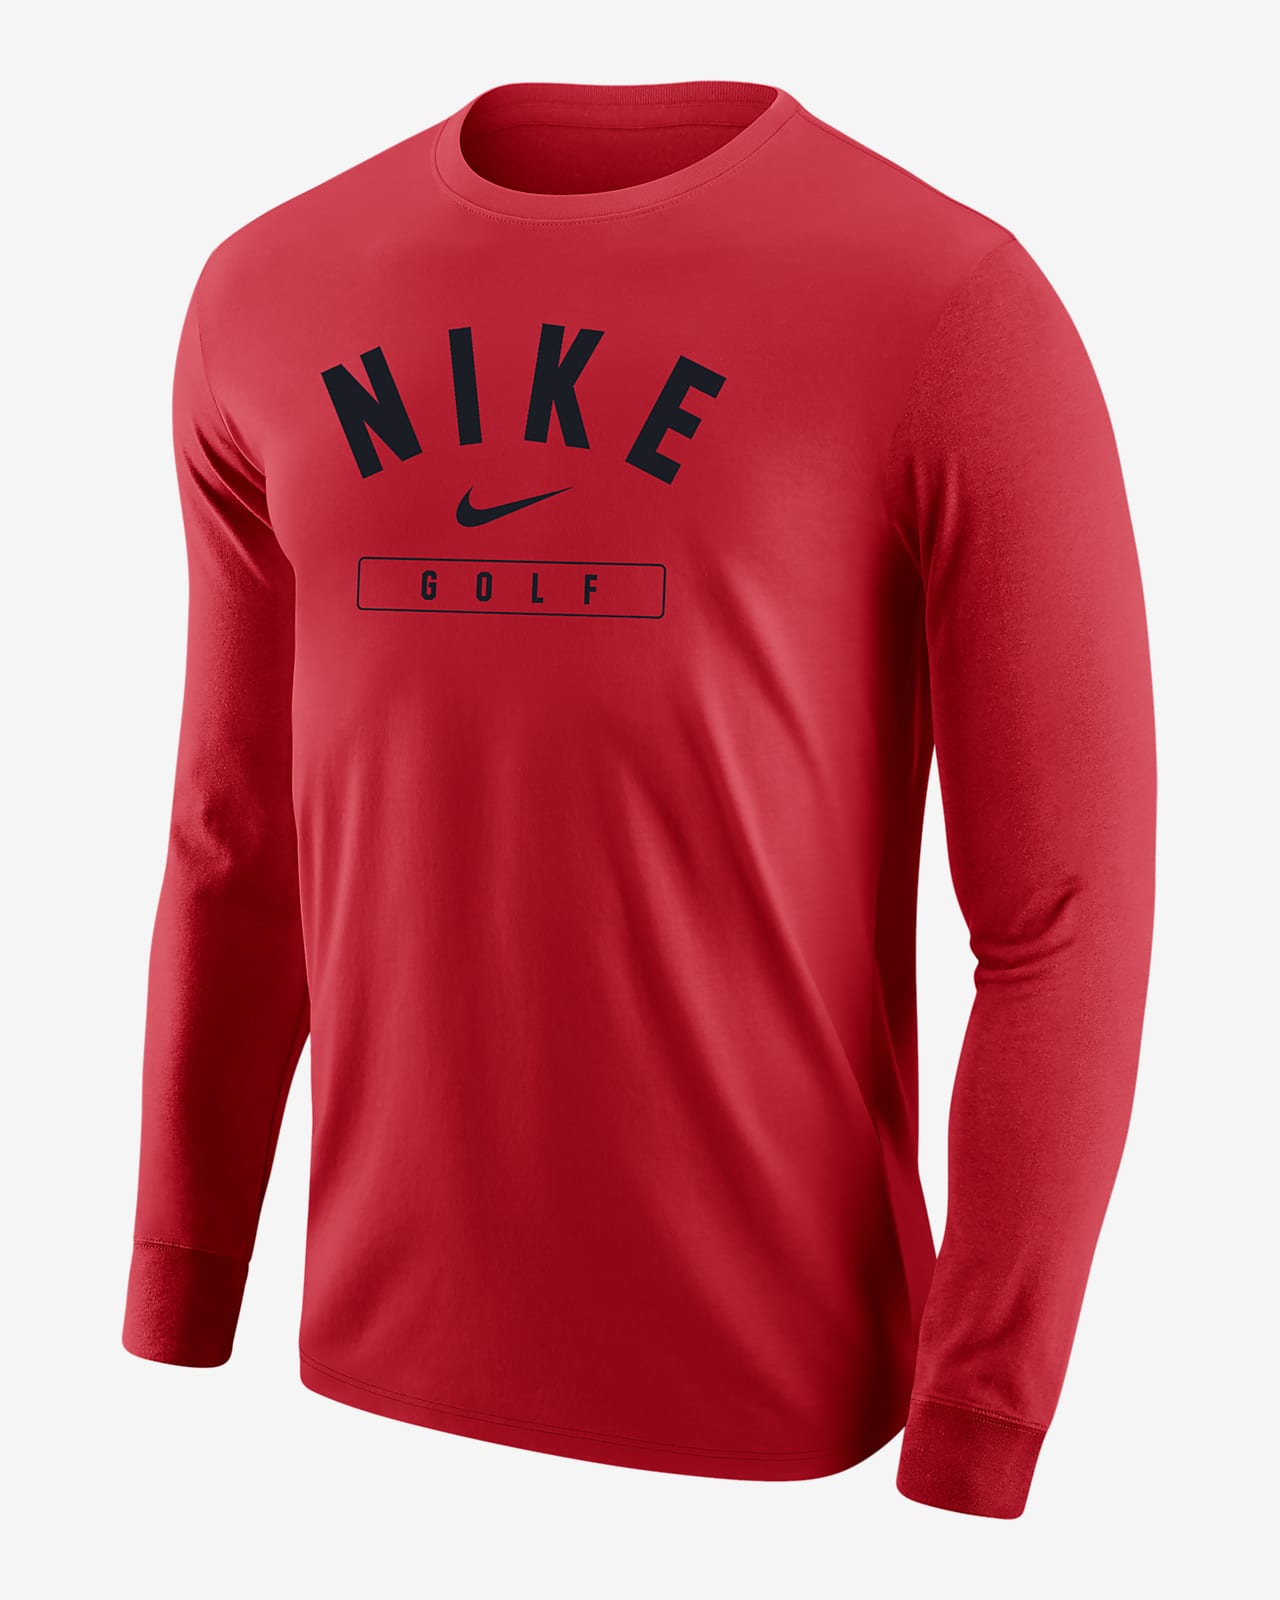 Nike Golf Men's Long-Sleeve T-Shirt